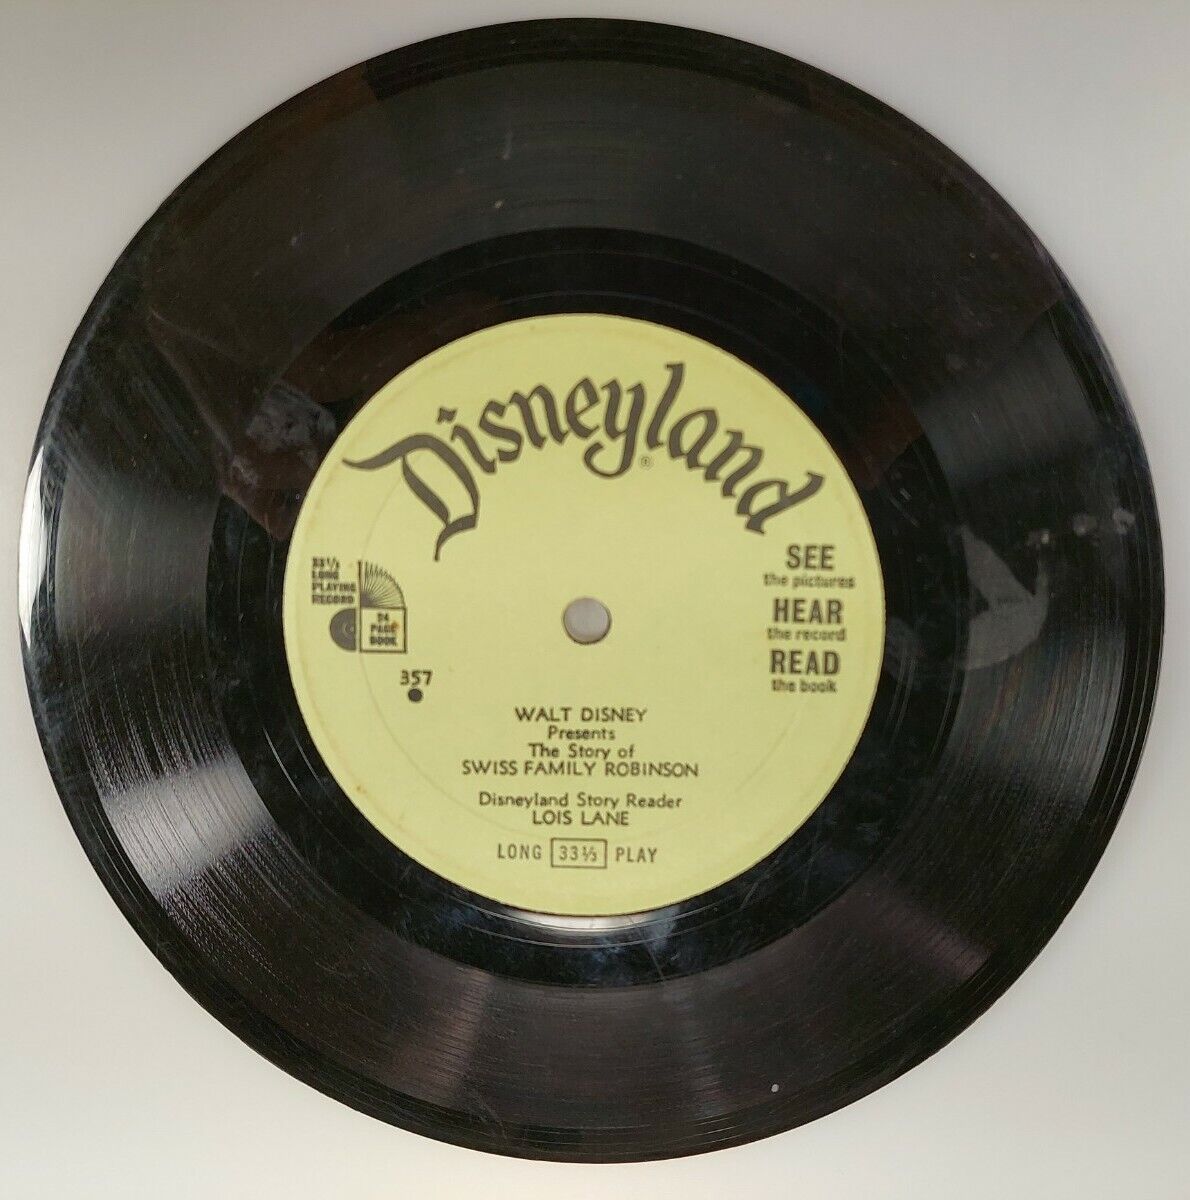 VTG 1971 Walt Disney Swiss Family Robinson #357 Disneyland Record 33 rpm 